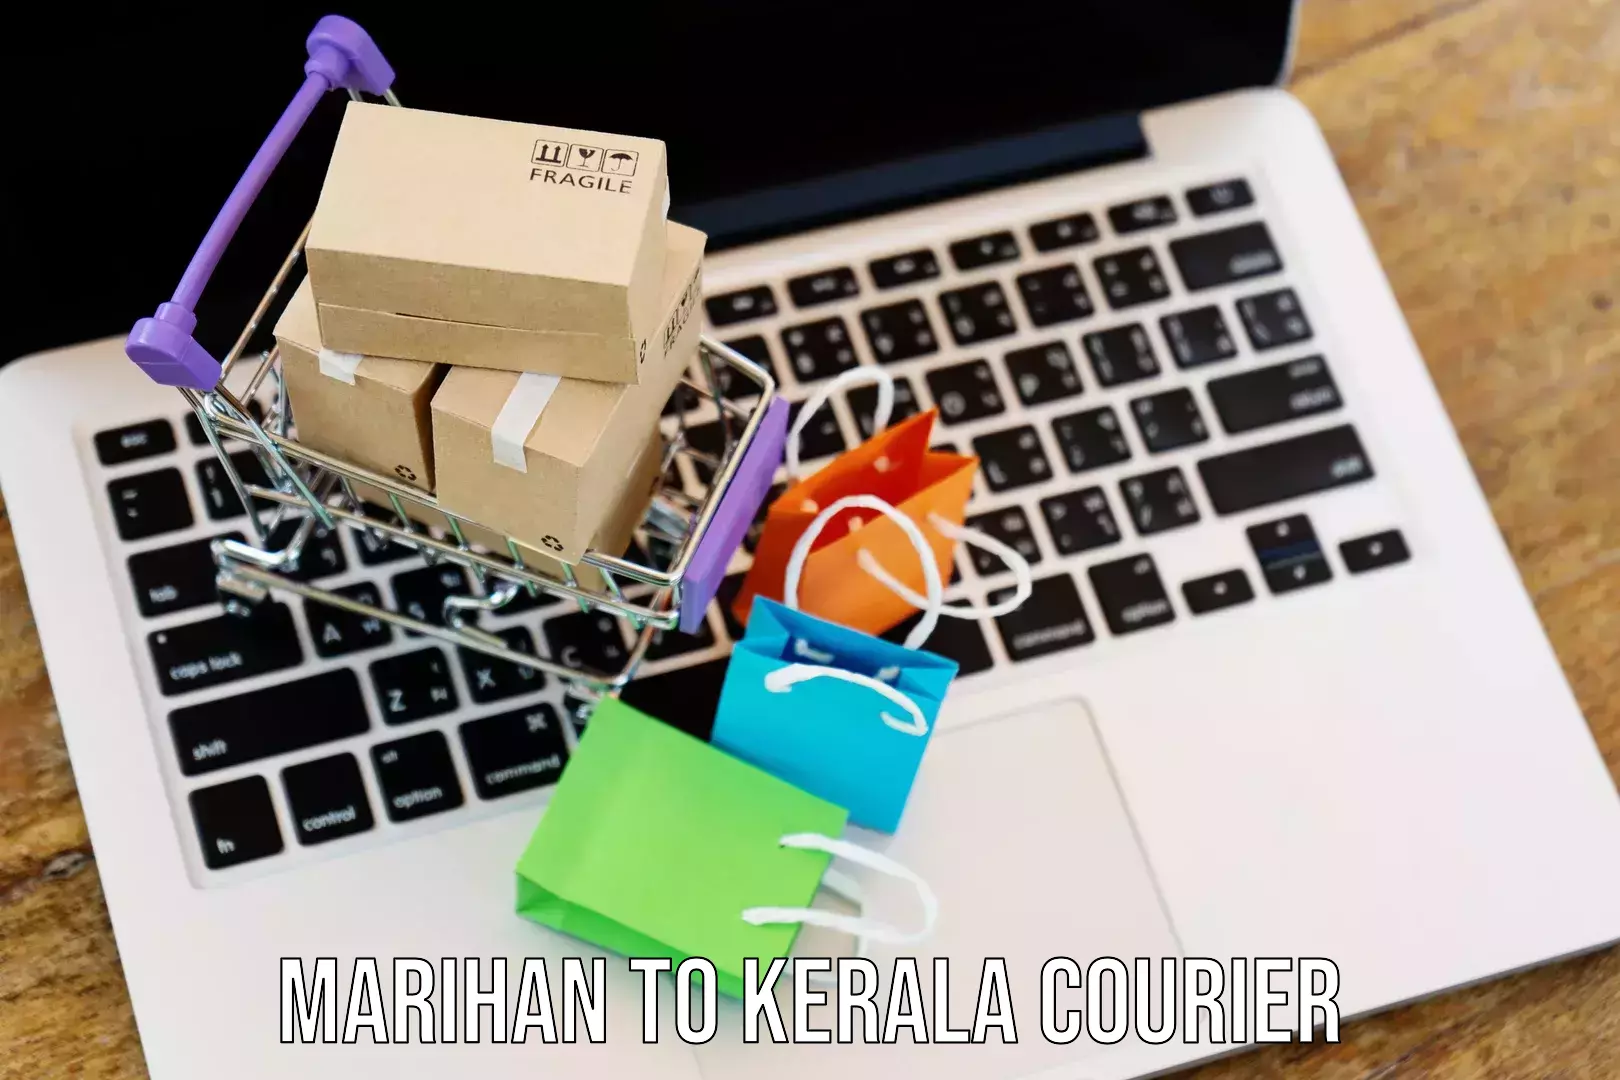 Express package handling Marihan to Kerala